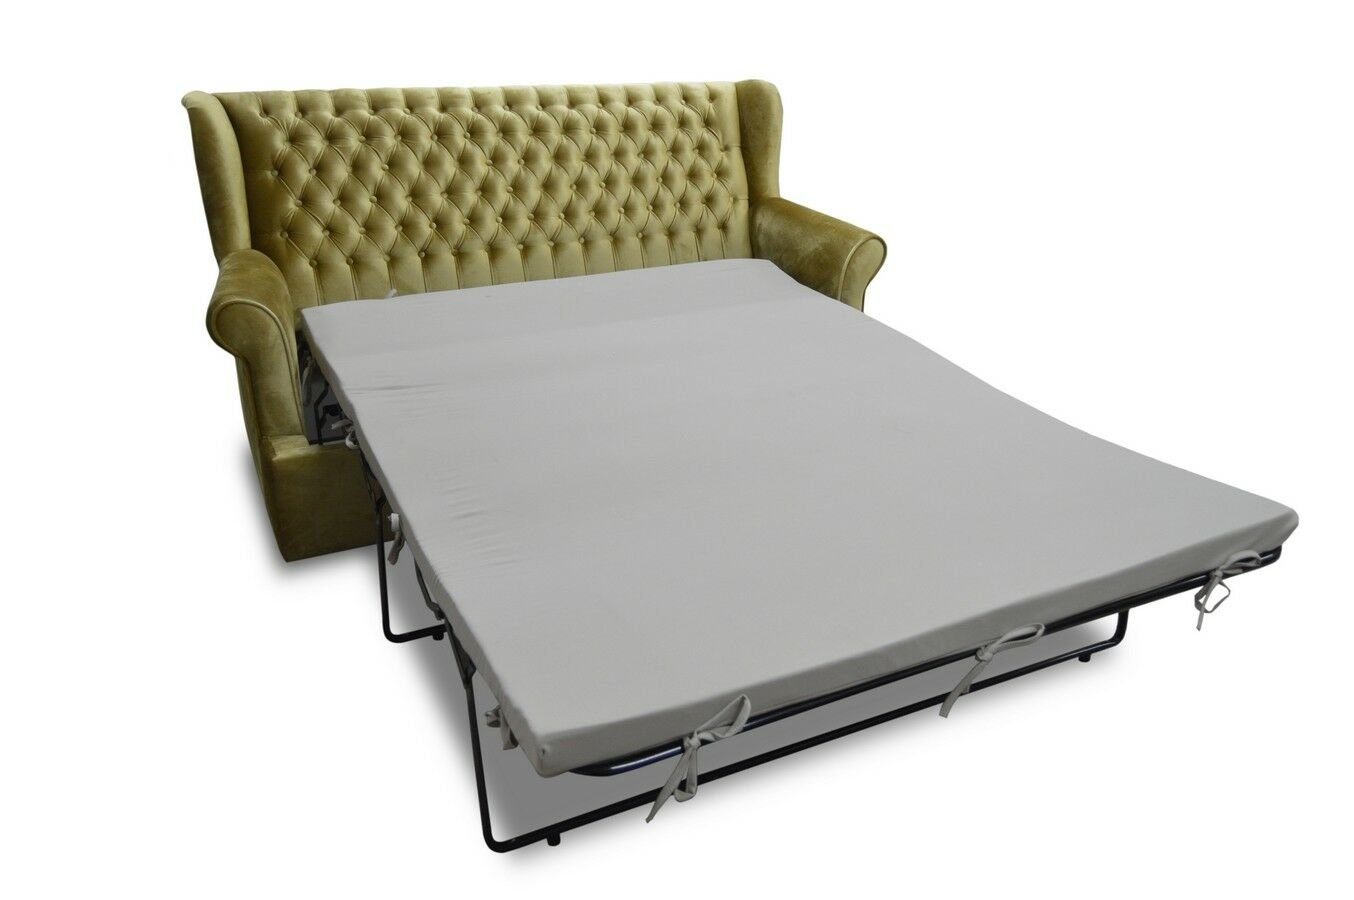 JVmoebel Sofa Chesterfield Couch Sofa Made in Mit Polster Bettfunktion Europe Designer Sitz